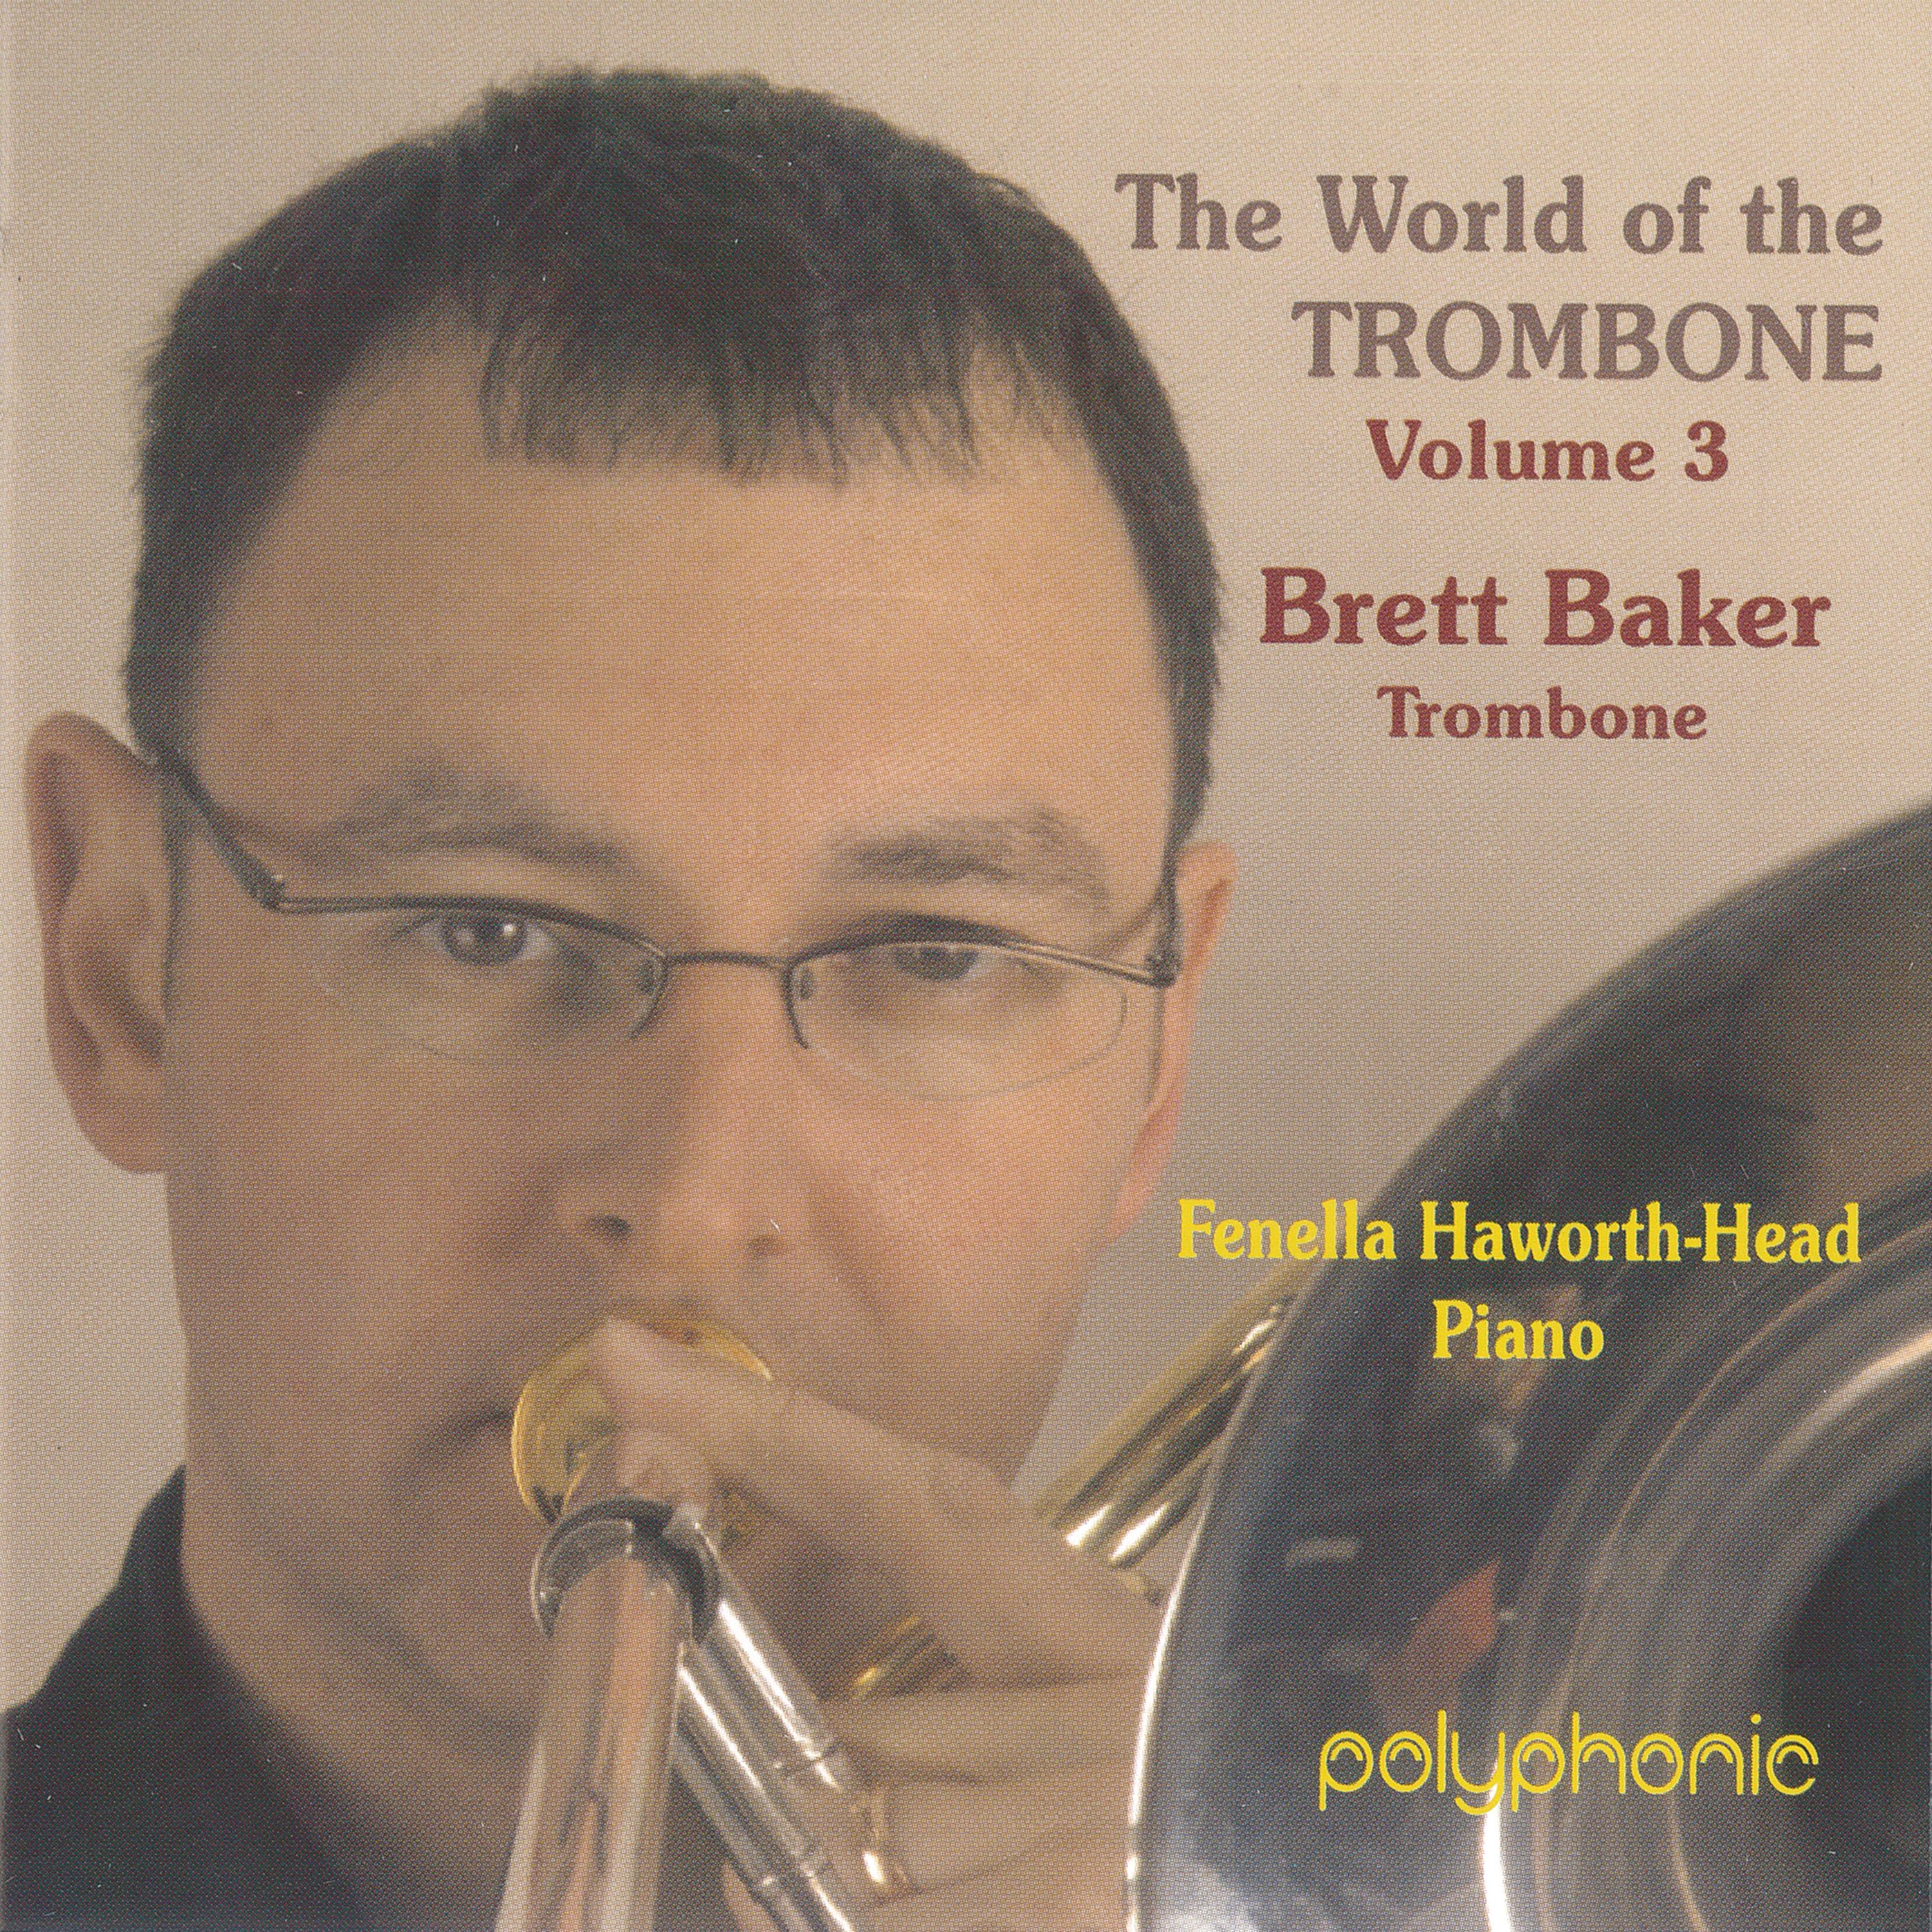 The World of the Trombone Vol. 3 - CD